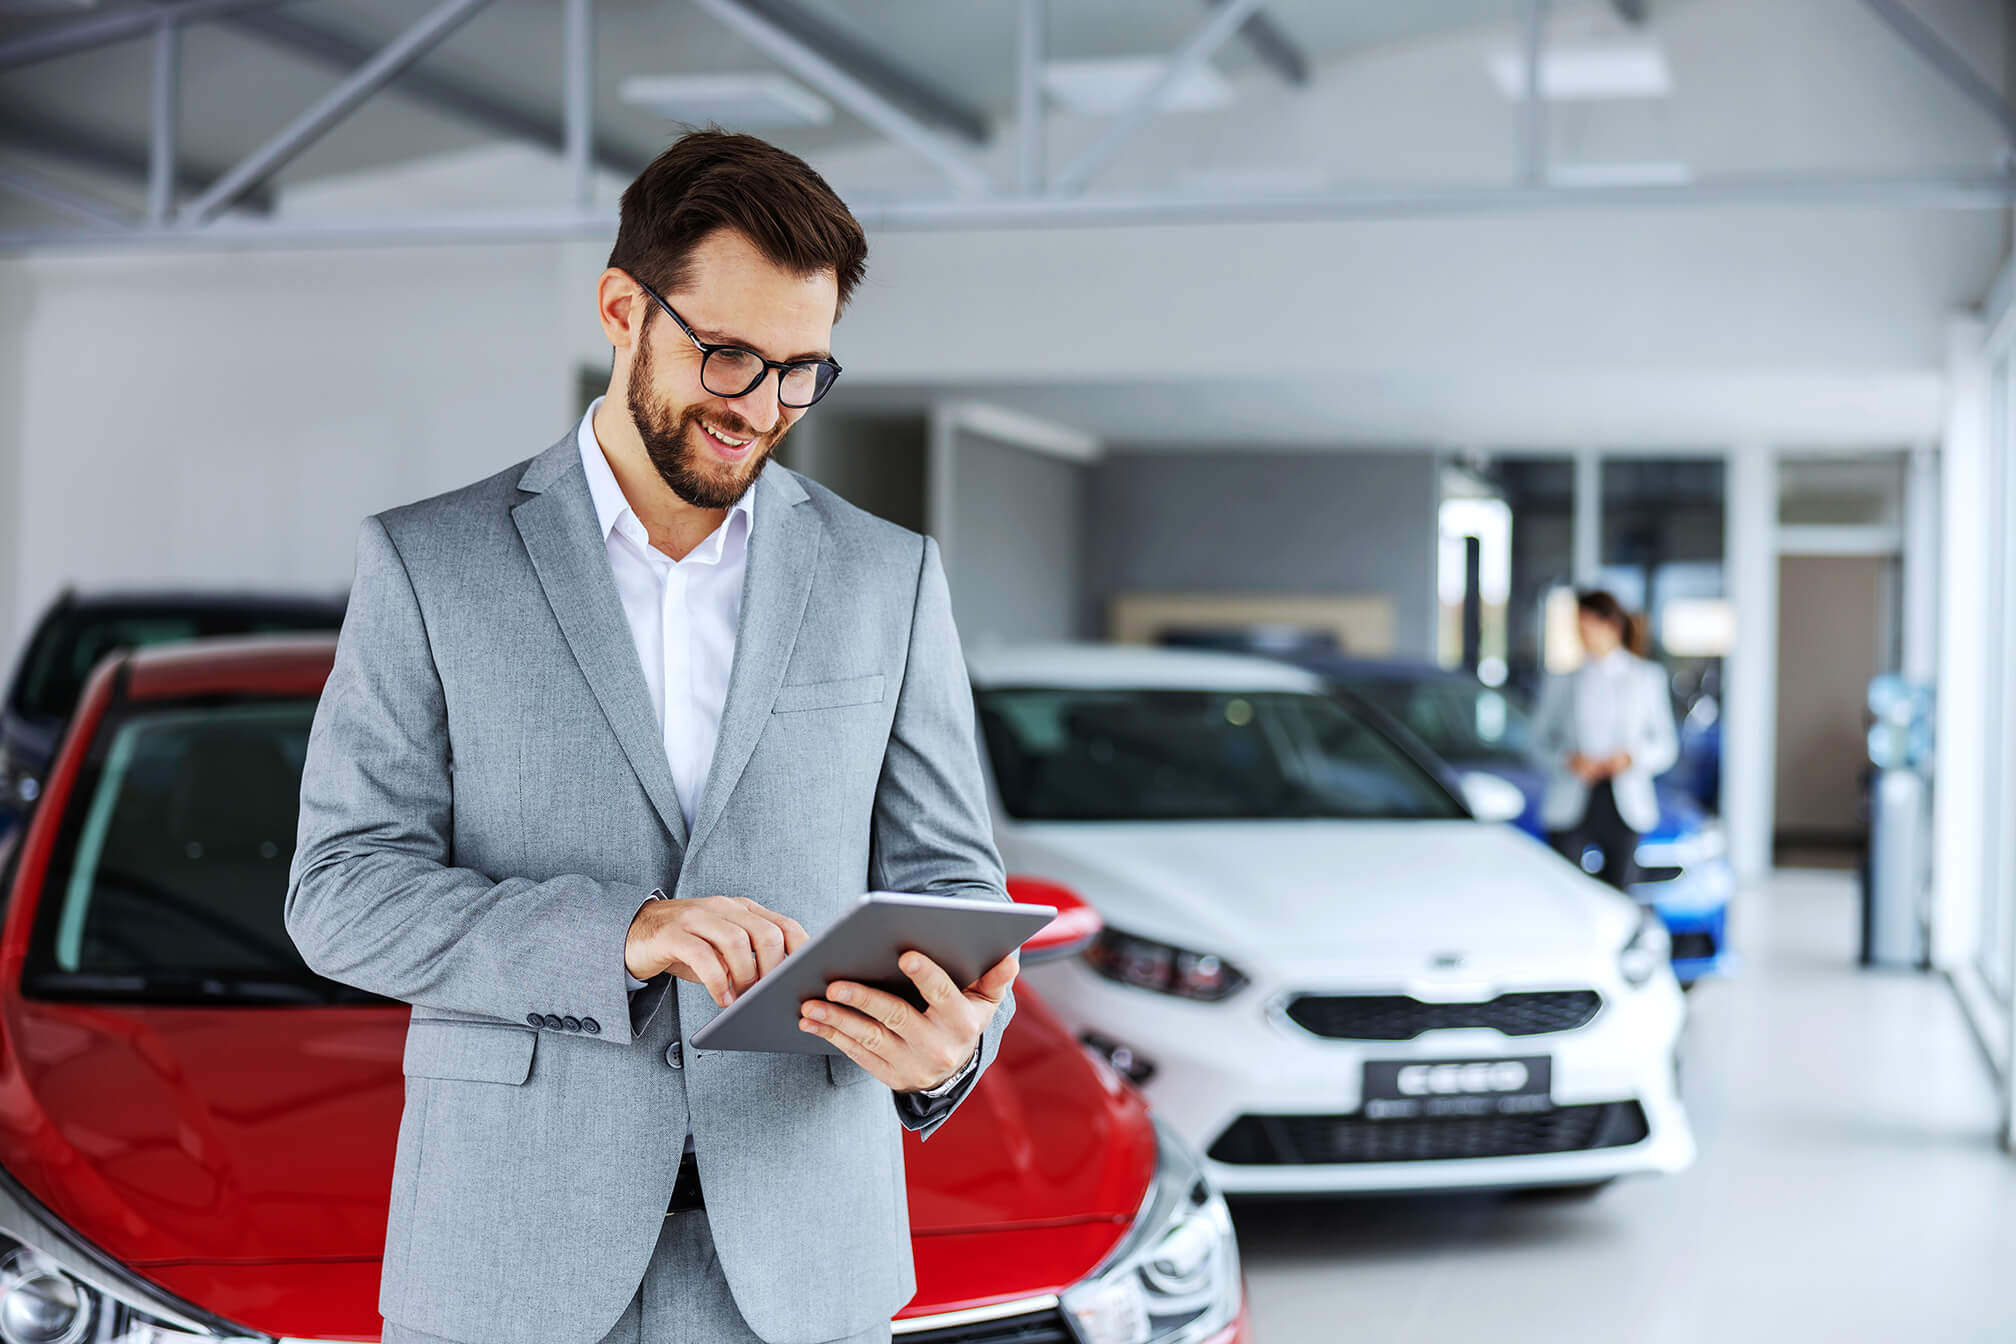 Car Sales Agent at Dealership using Dynamics 365 Web Portal